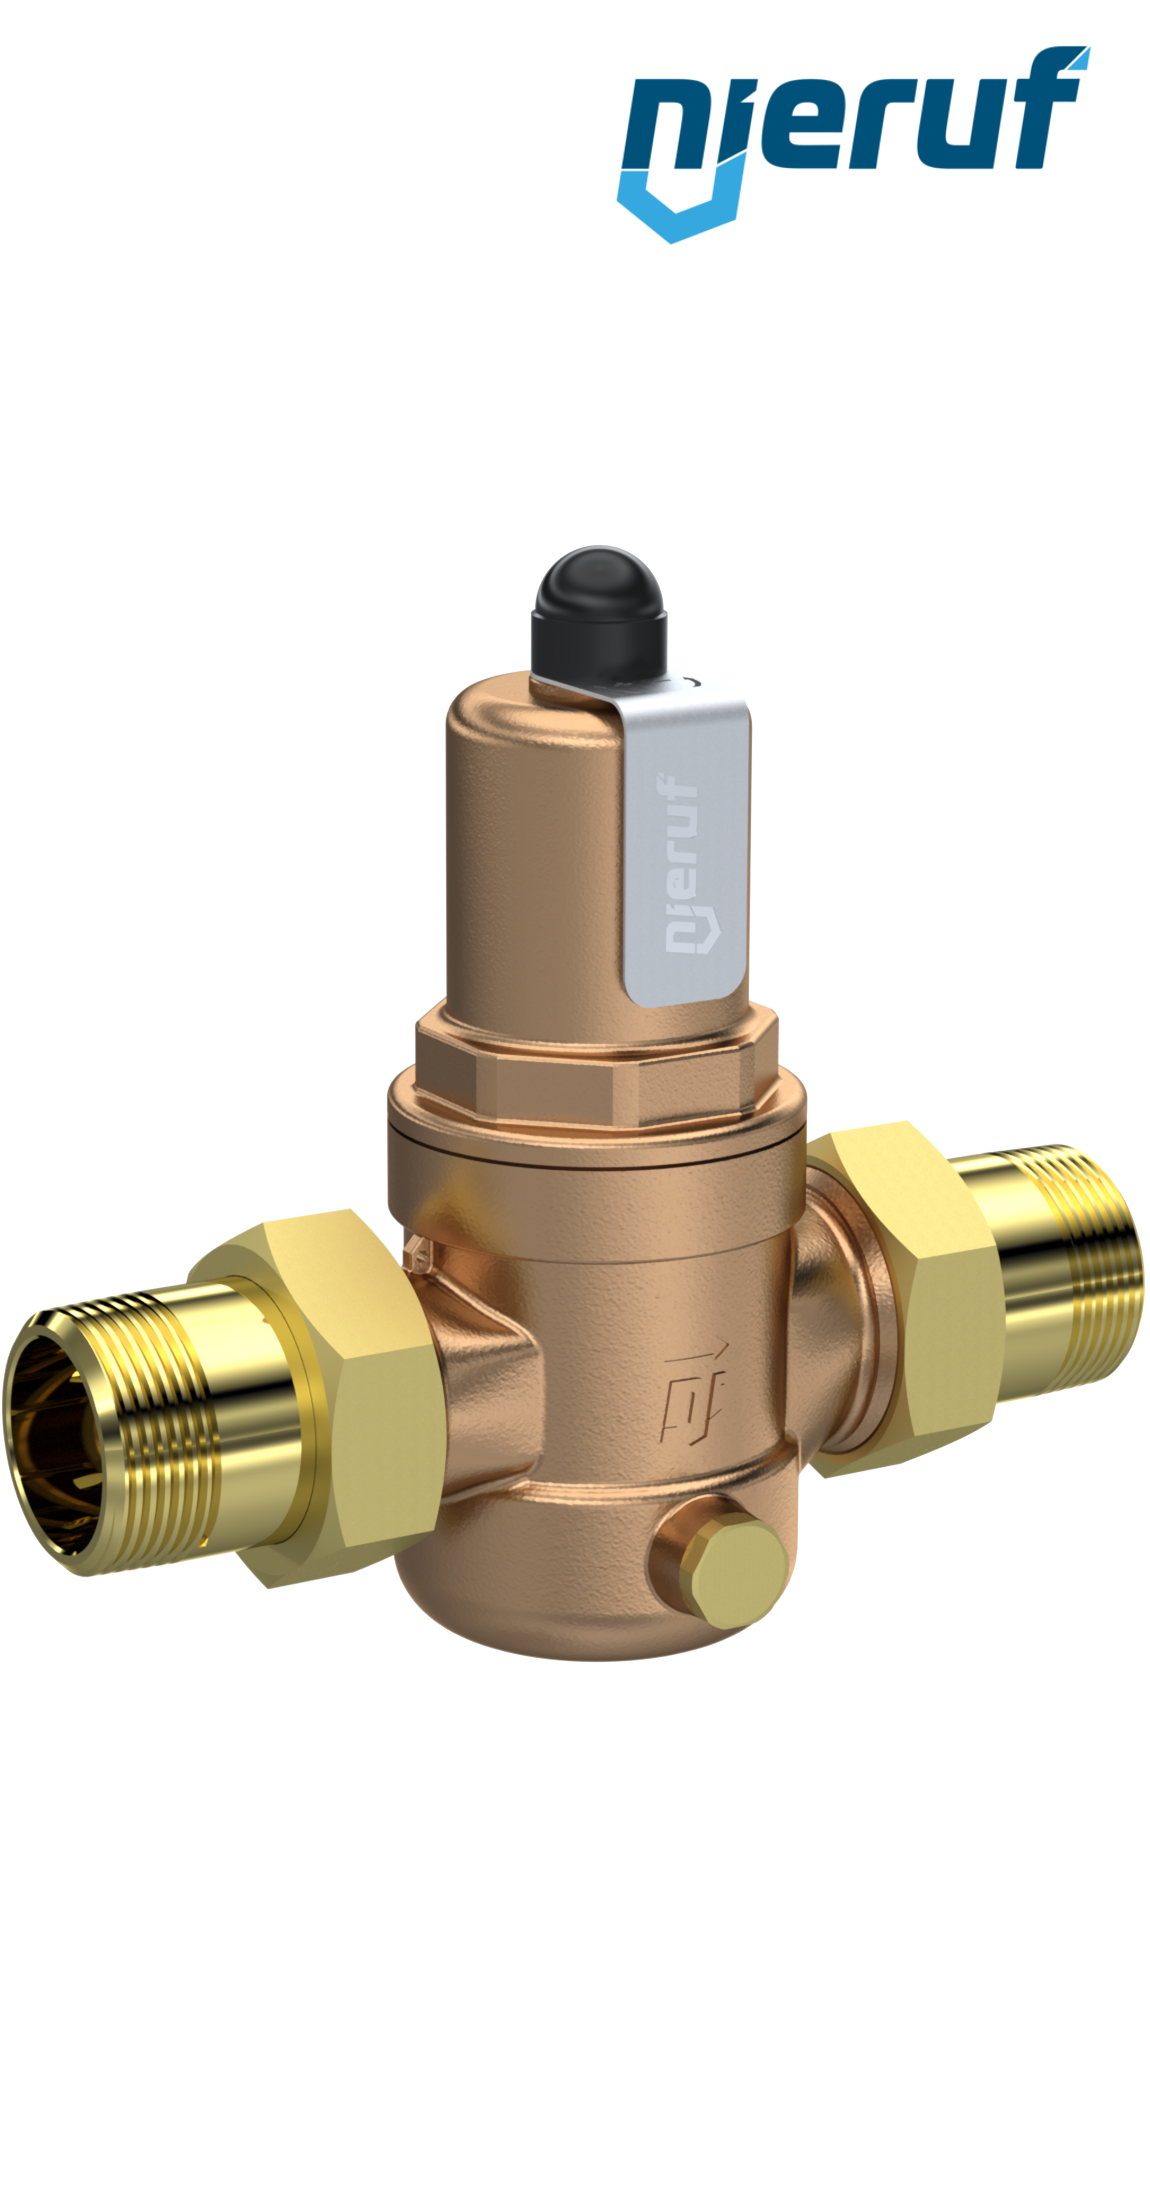 pressure reducing valve 3/4" inch male thread DM02 gunmetal FKM 1.0 - 8.0 bar